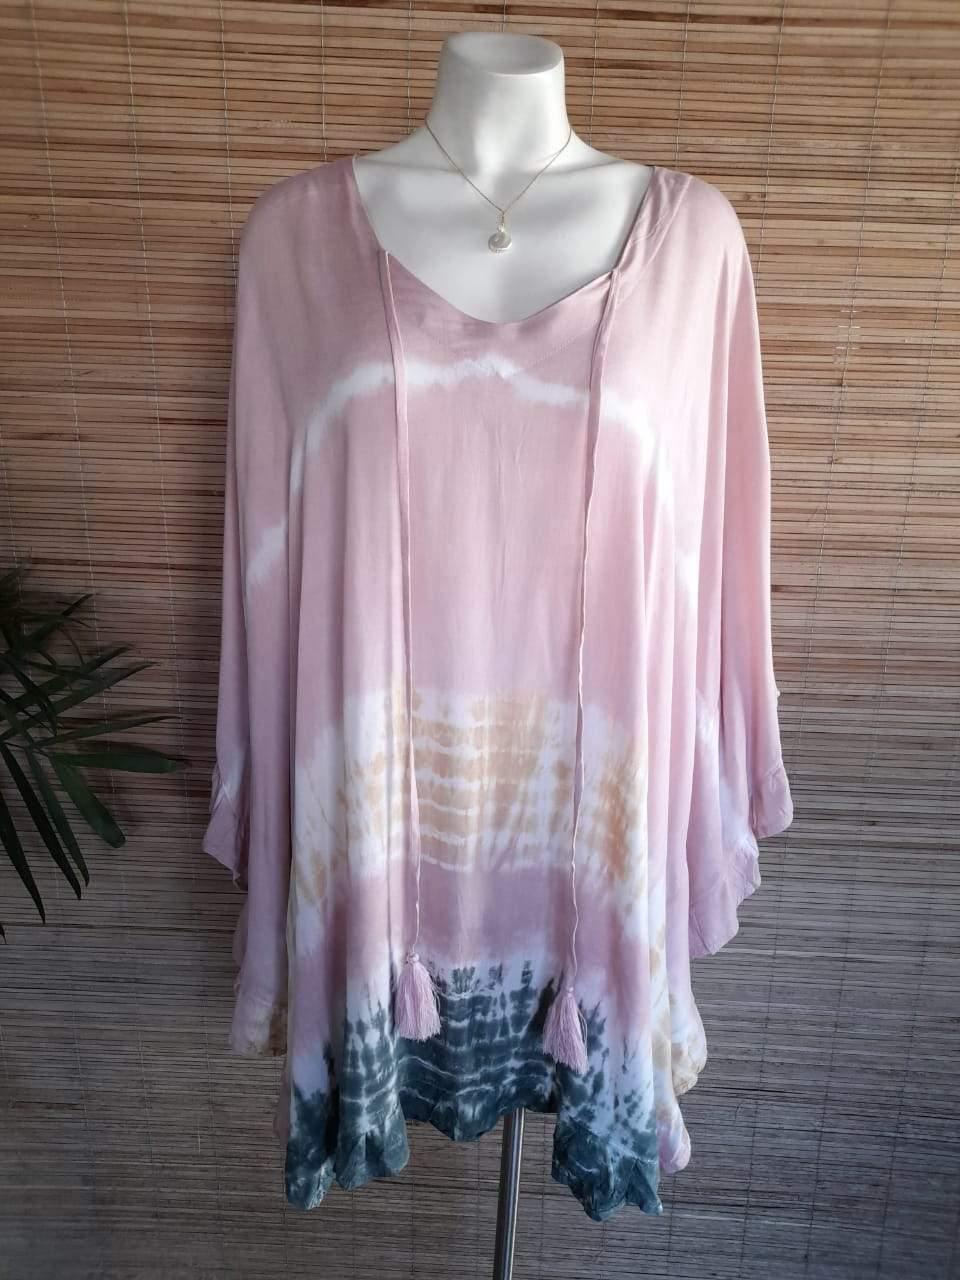 TOP/ DRESS GWENDOLYN in 4 Tie Dye Colors - Lemongrass Bali Boutique